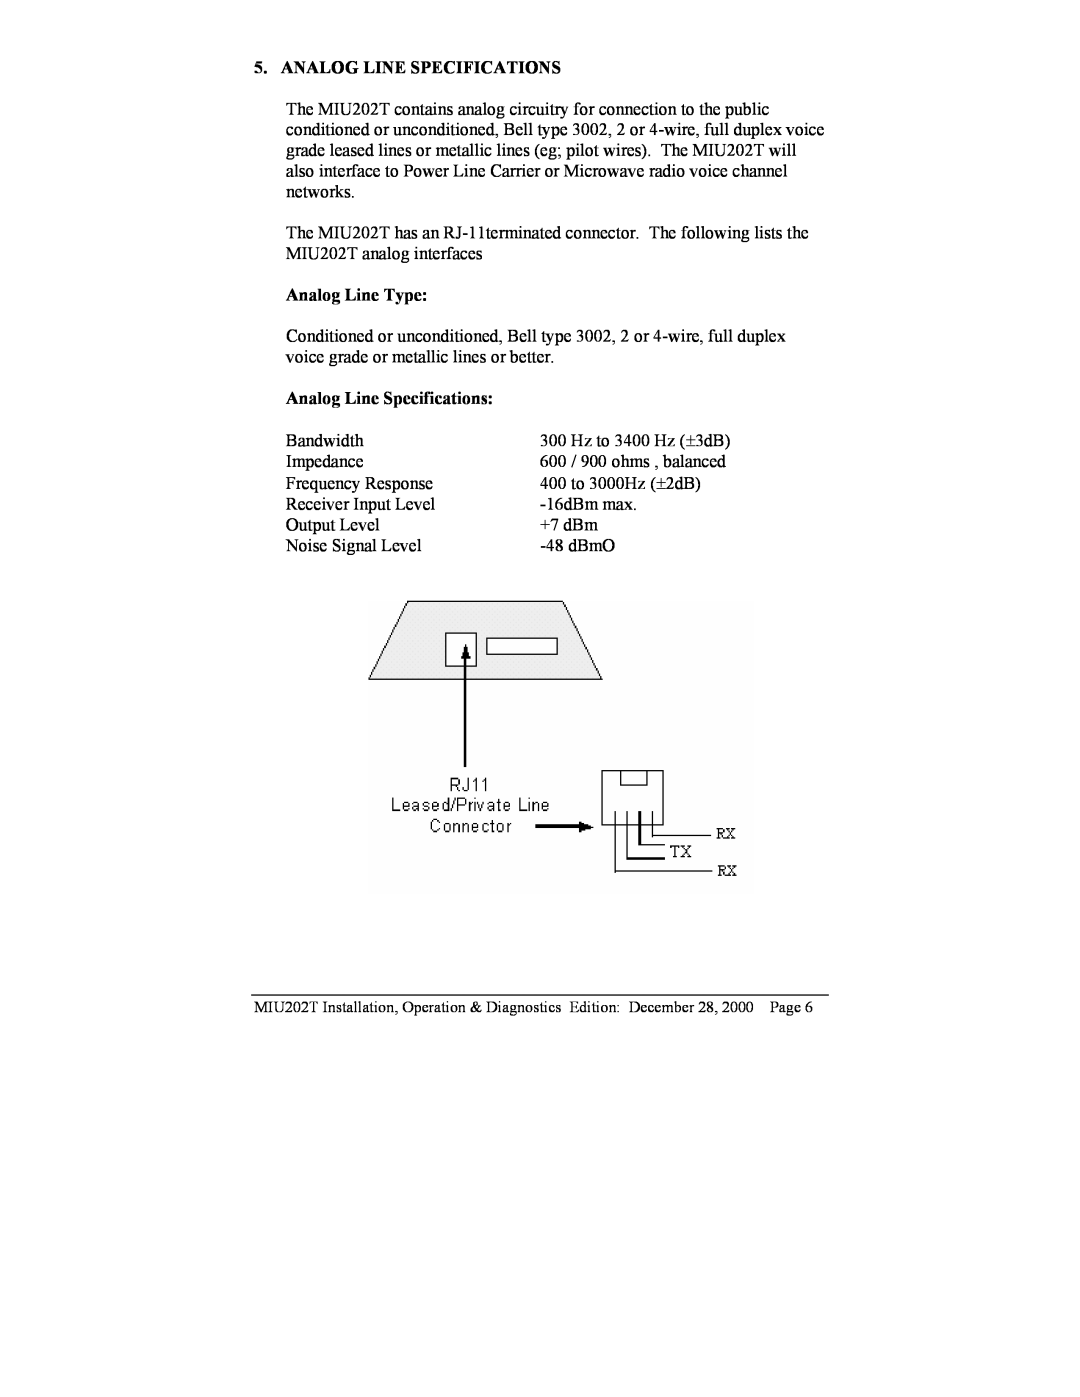 Telenetics MIU202T Modem manual Analog Line Specifications, Analog Line Type 